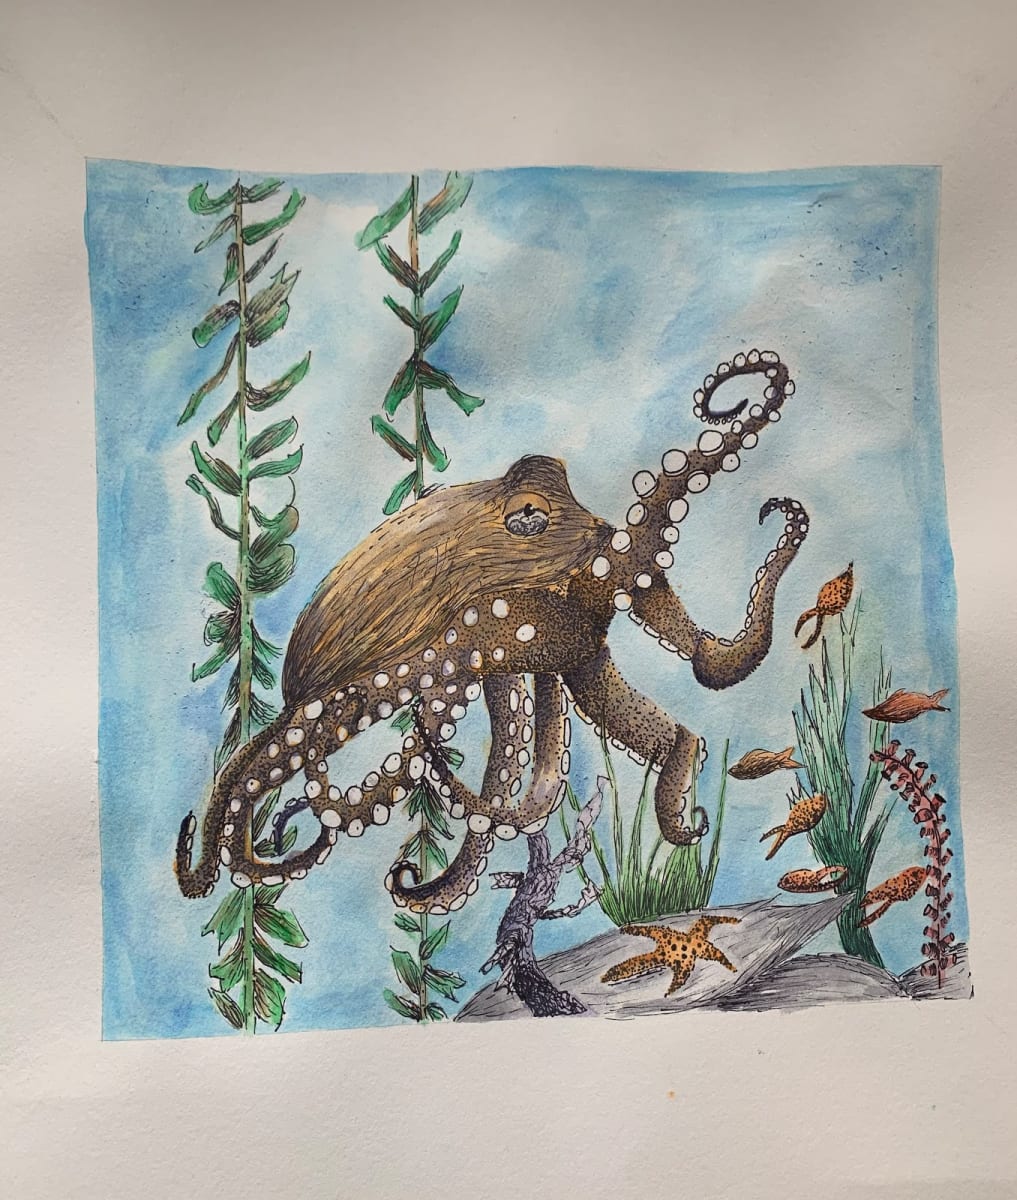 Octopus's Garden by Mira Parejo 